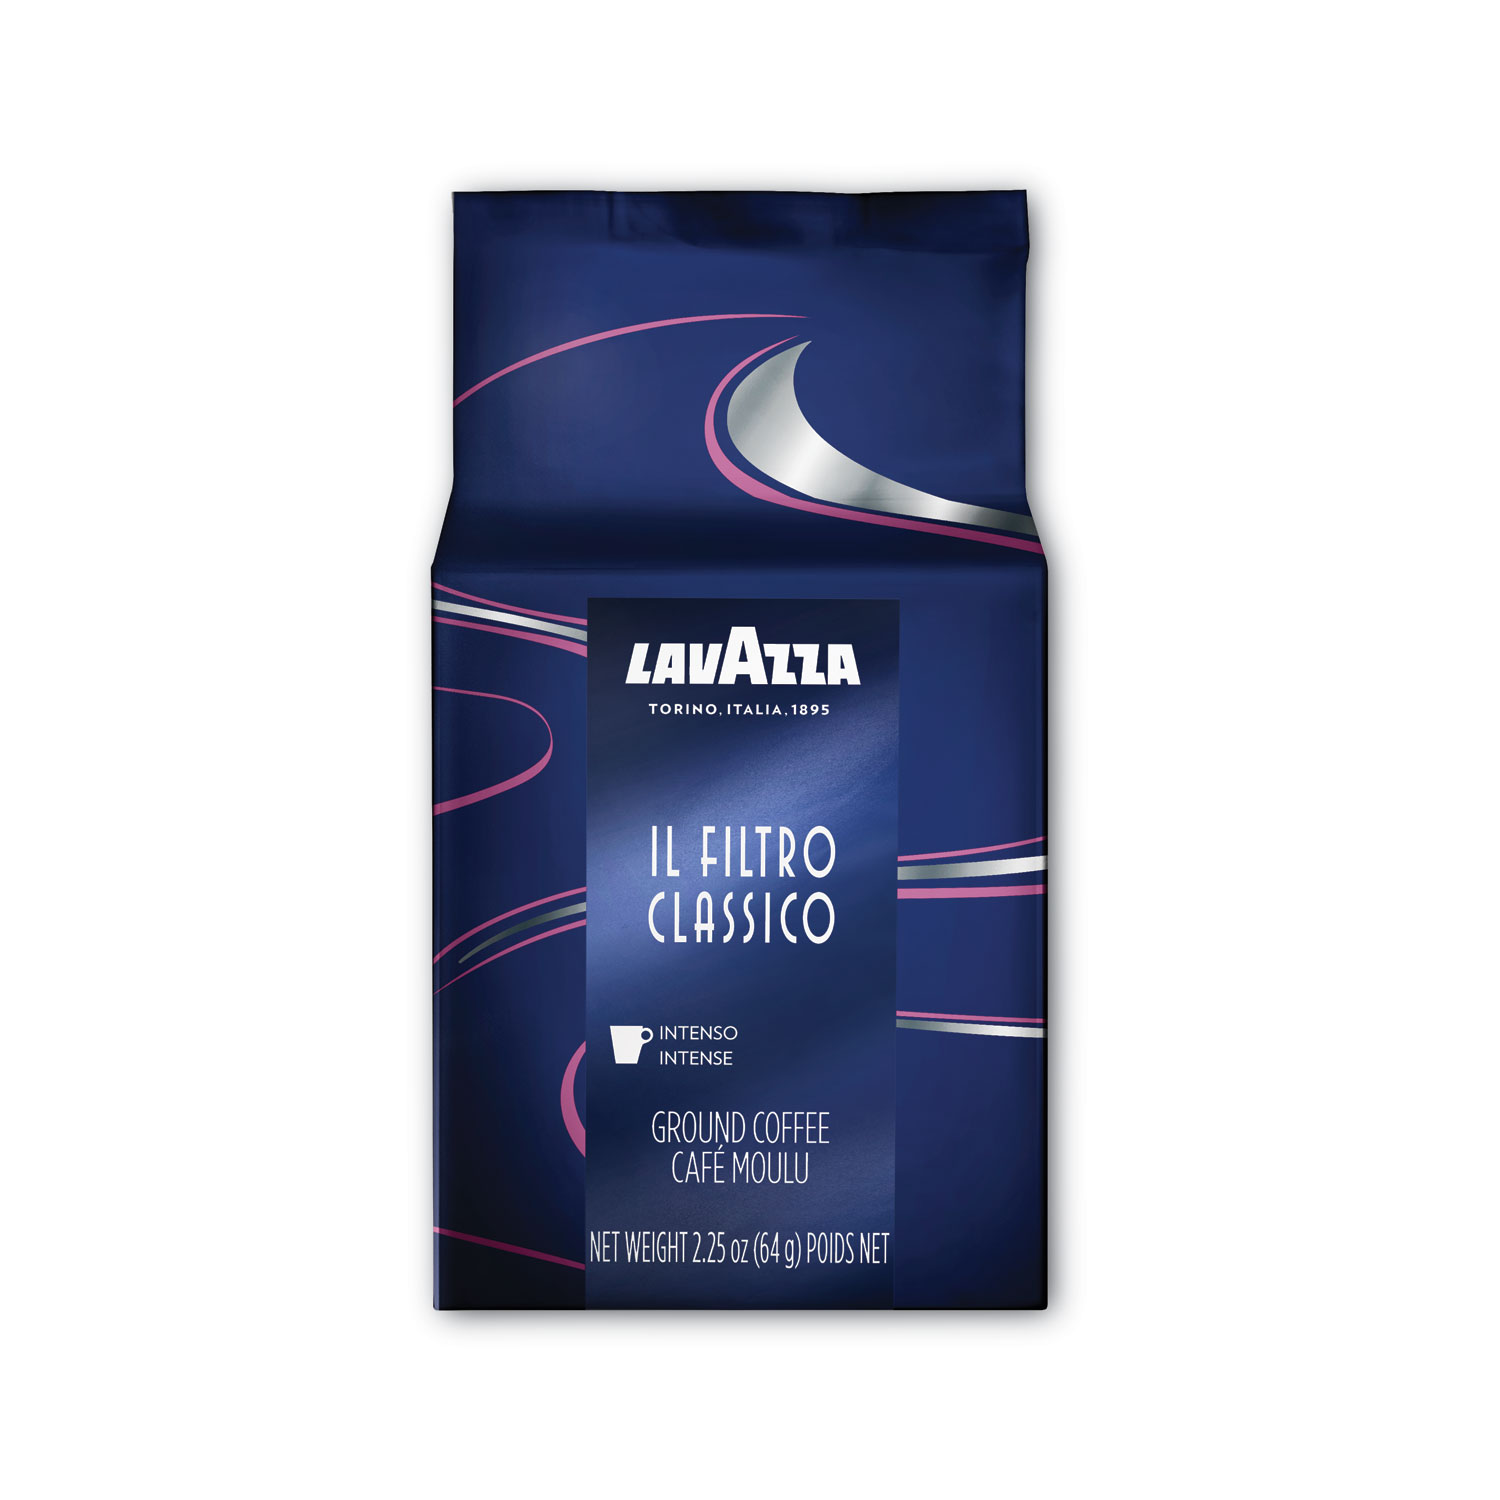  Lavazza 3446 Filtro Classico Fractional Coffee, Dark and Intense, 2.2 oz Fraction Pack, 30/Carton (LAV3446) 